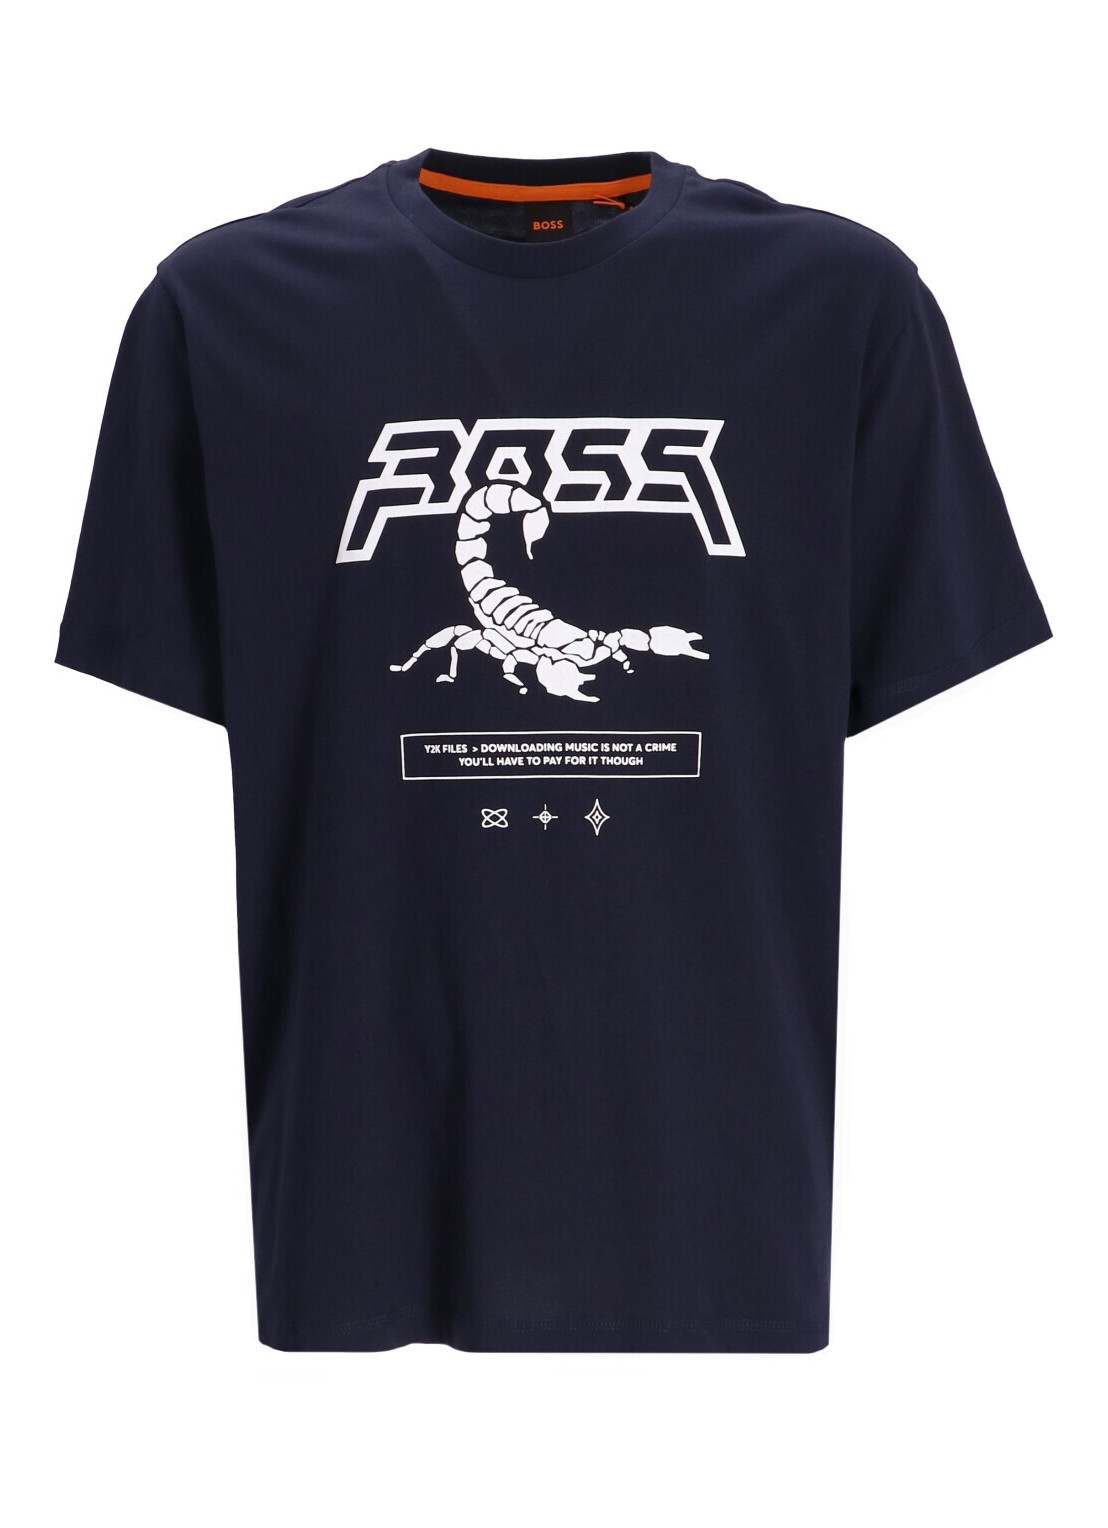 Camiseta boss t-shirt mantescorpion - 50510648 404 talla XXL
 